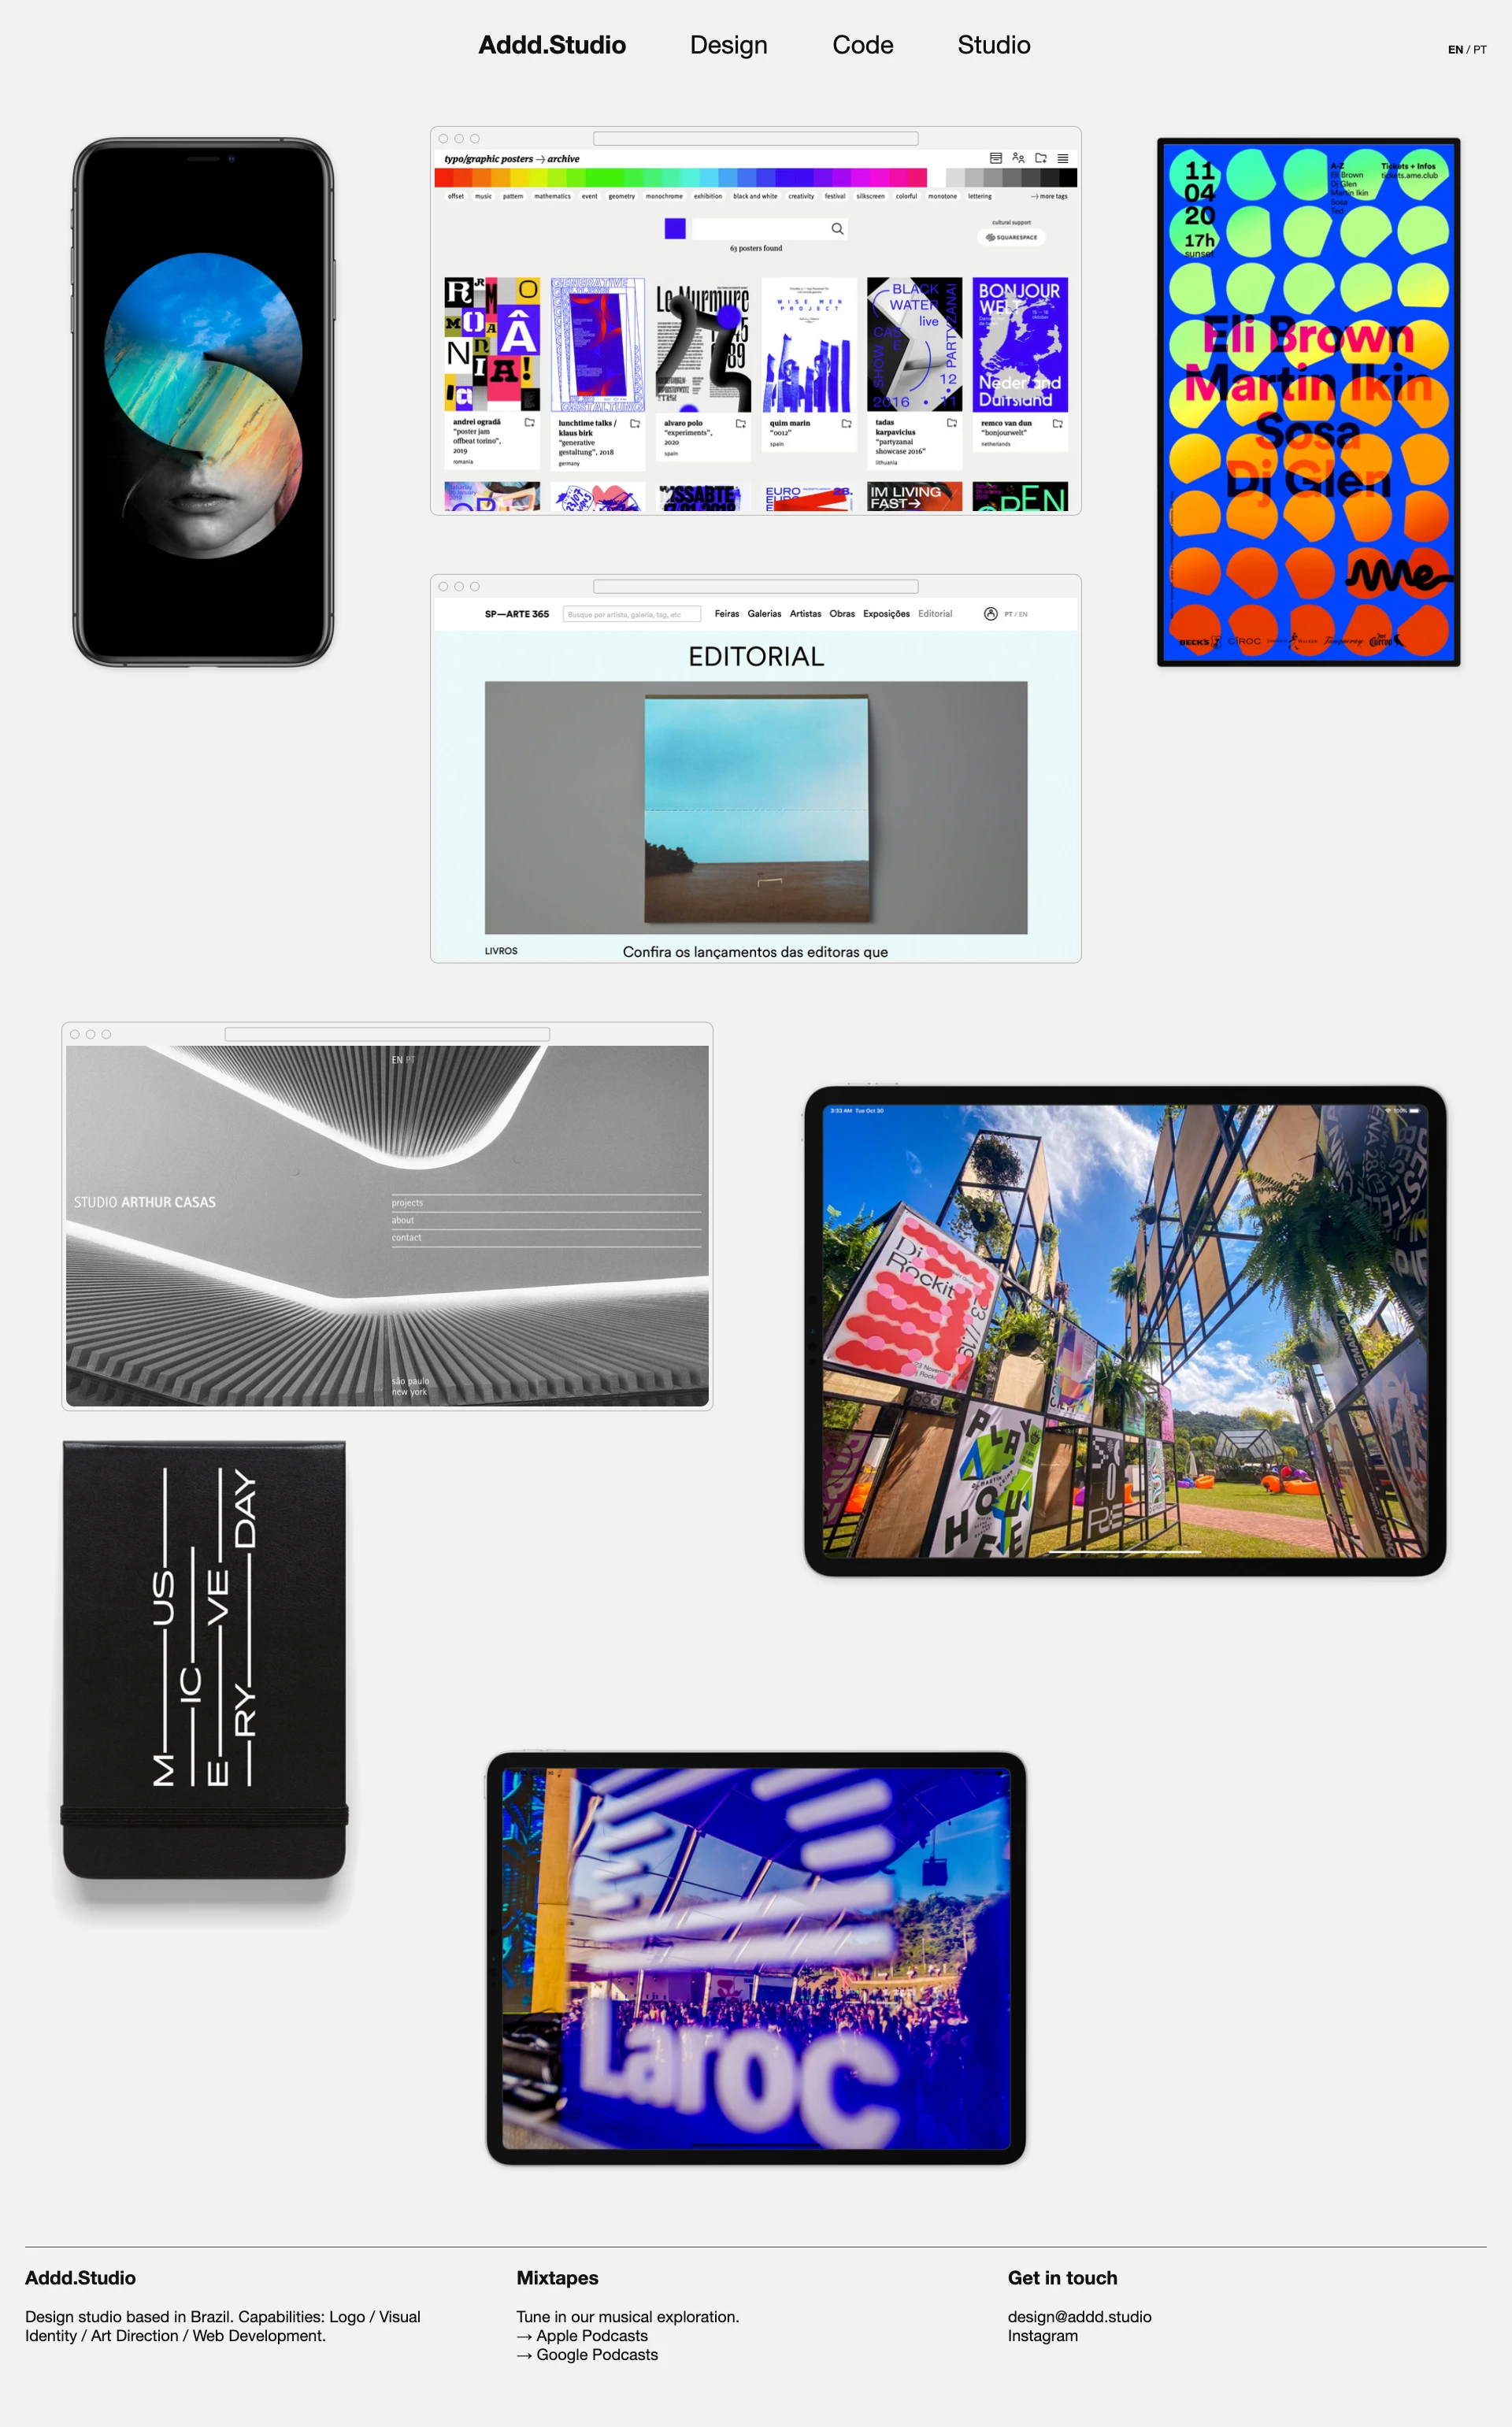 Addd.Studio Landing Page Example: Design studio based in Brazil. Capabilities: Logo / Visual Identity / Art Direction / Web Development.